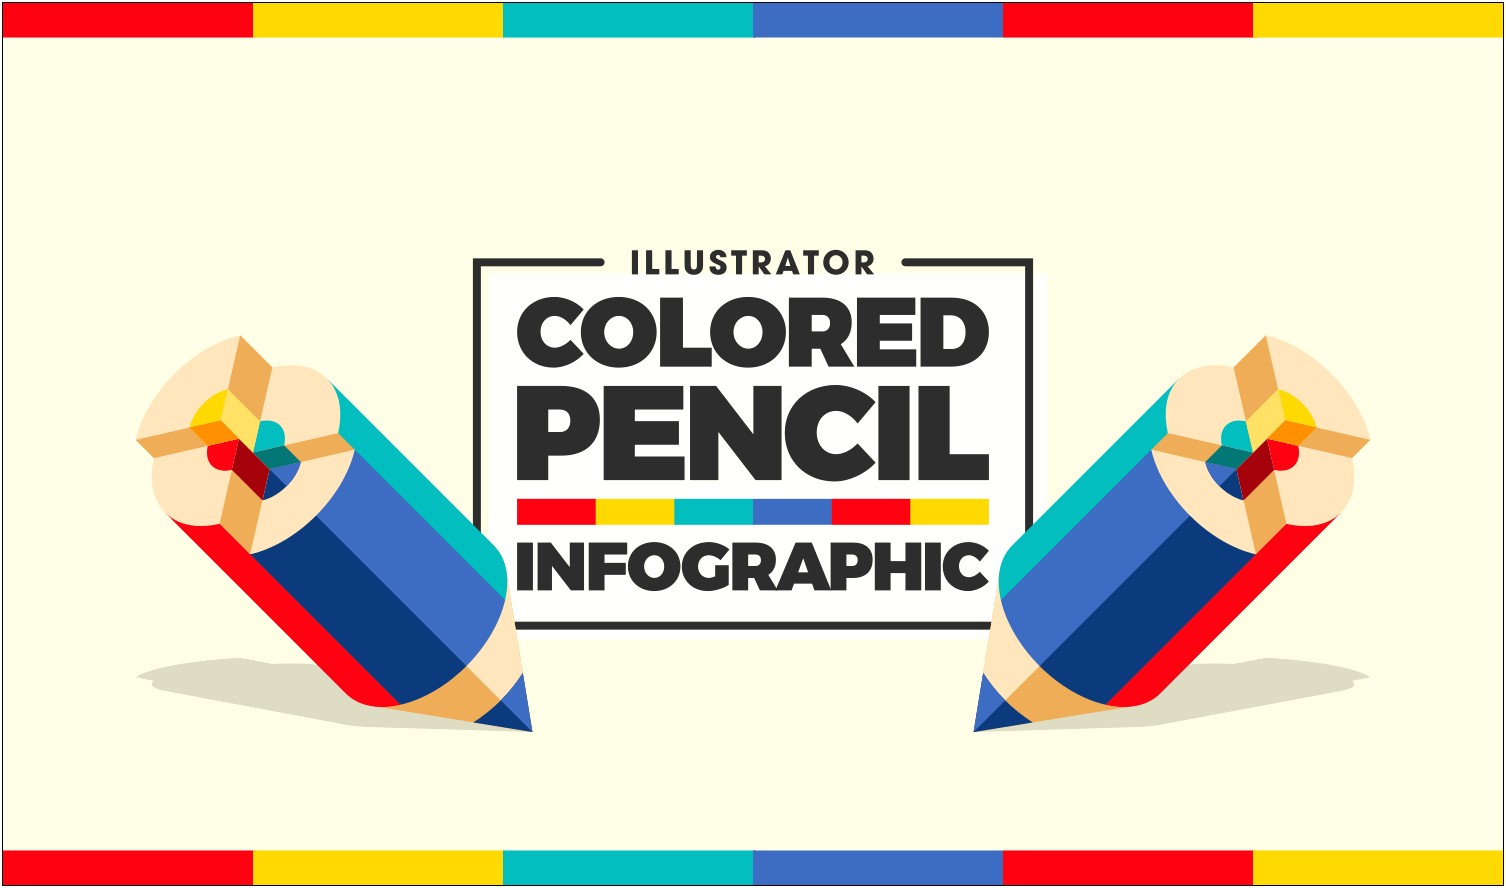 Adobe Illustrator Infographic Templates Free Download